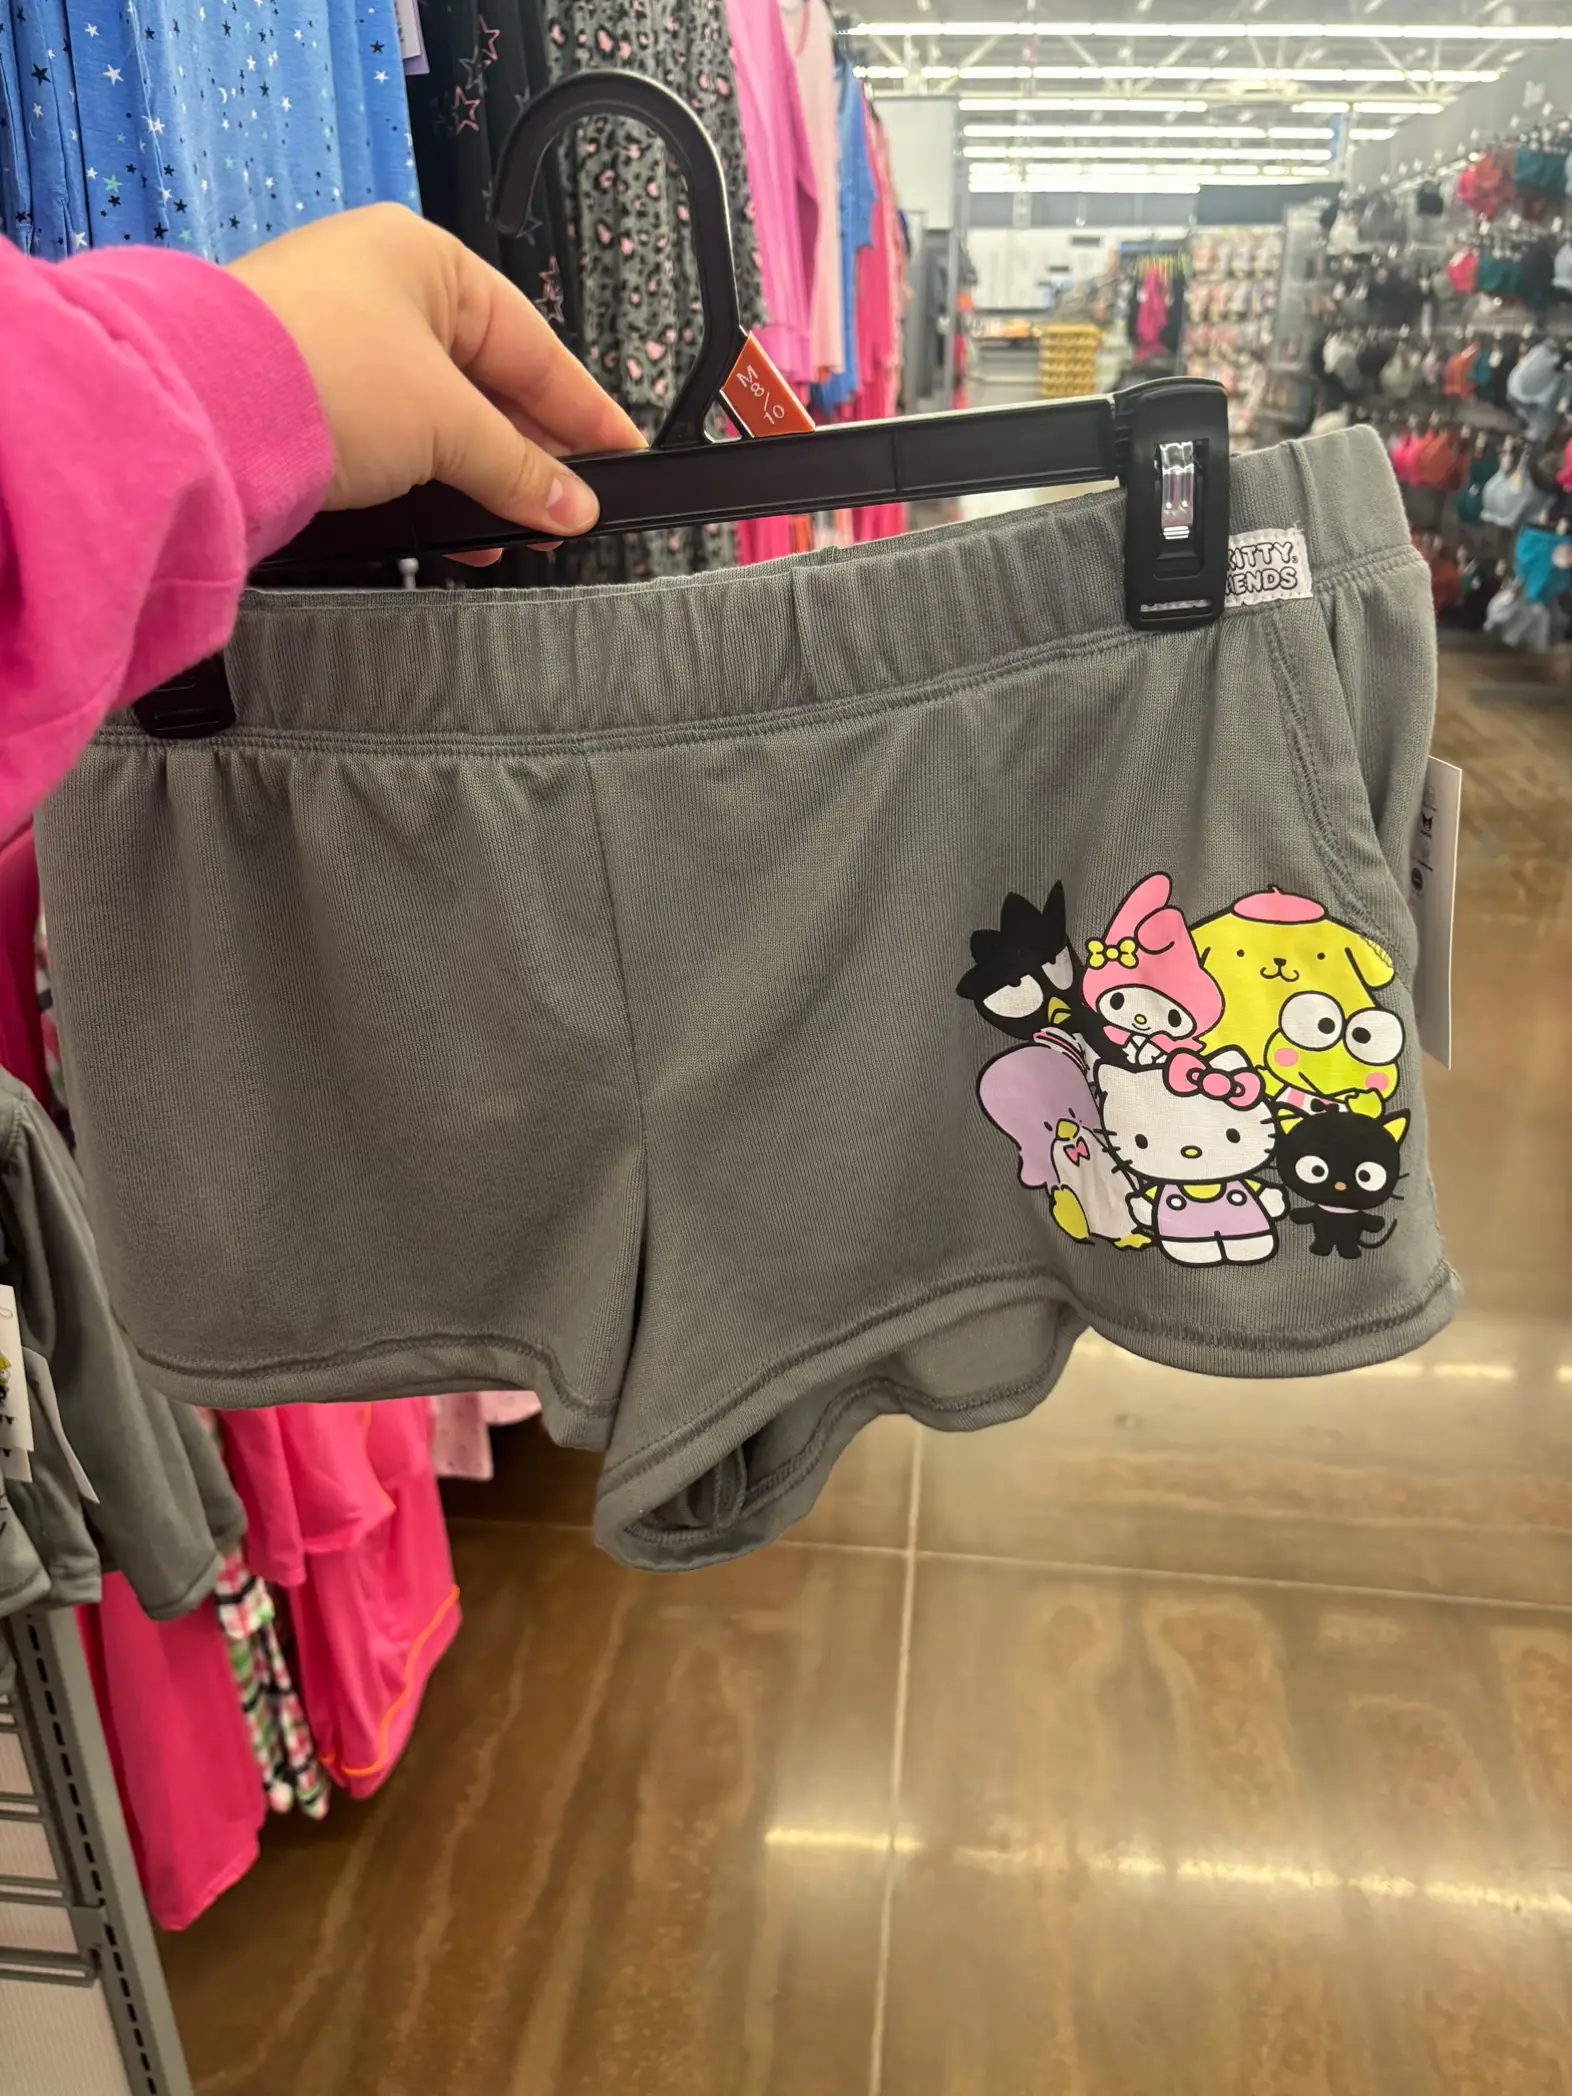 2Pcs/lot Children's Underwear for Kids Sanrioed Hello Kitty Anime Cartoon  Shorts Soft Cotton Underpants Panties Princess Cartoon - AliExpress